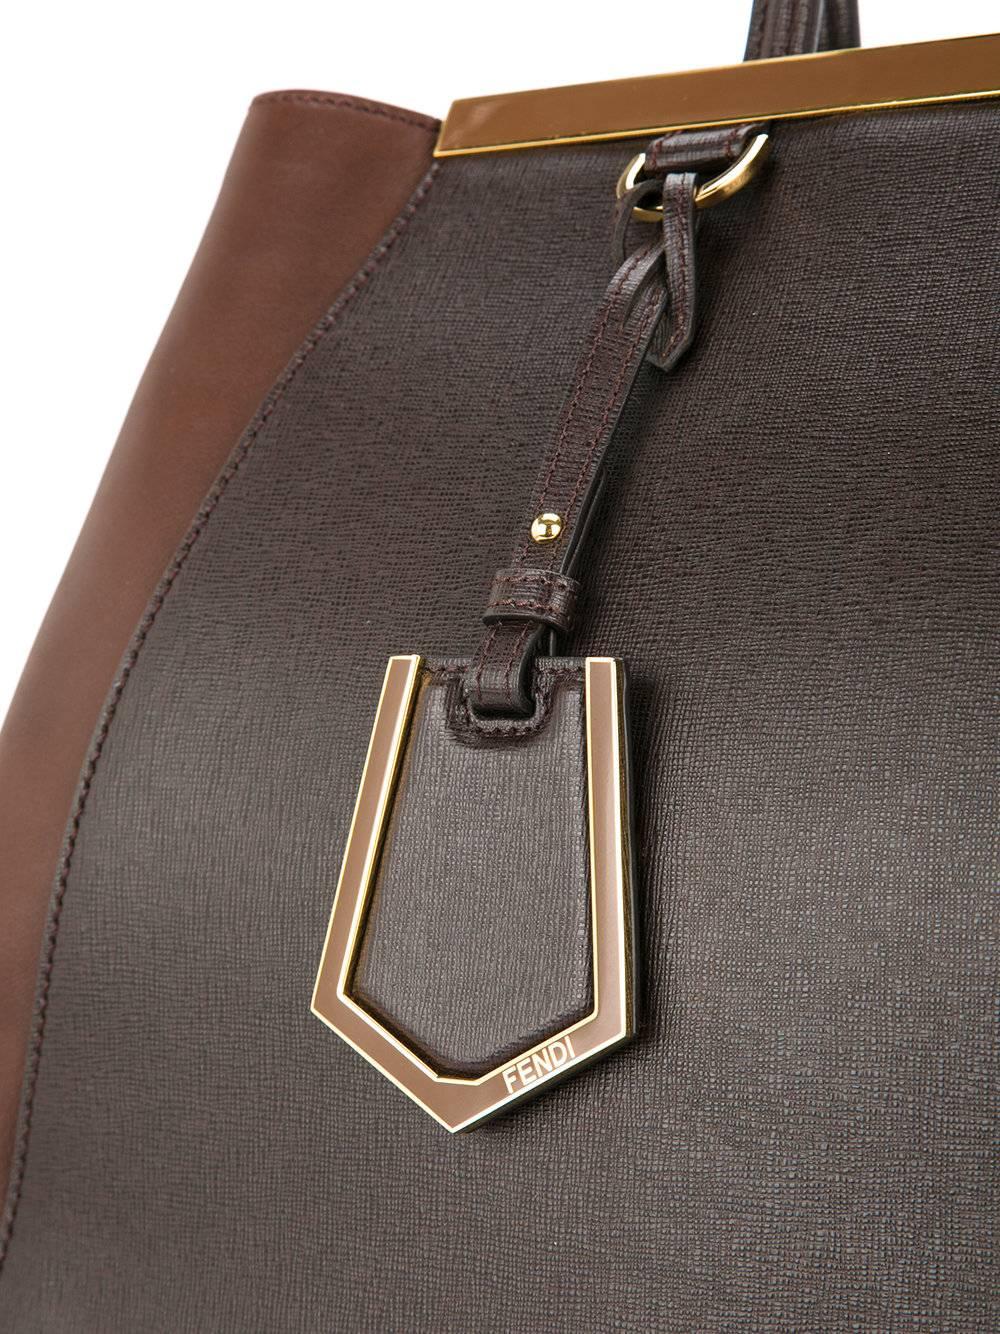 Black Fendi Chocolate Leather Large Carryall Travel Weekender Top Handle Tote Bag